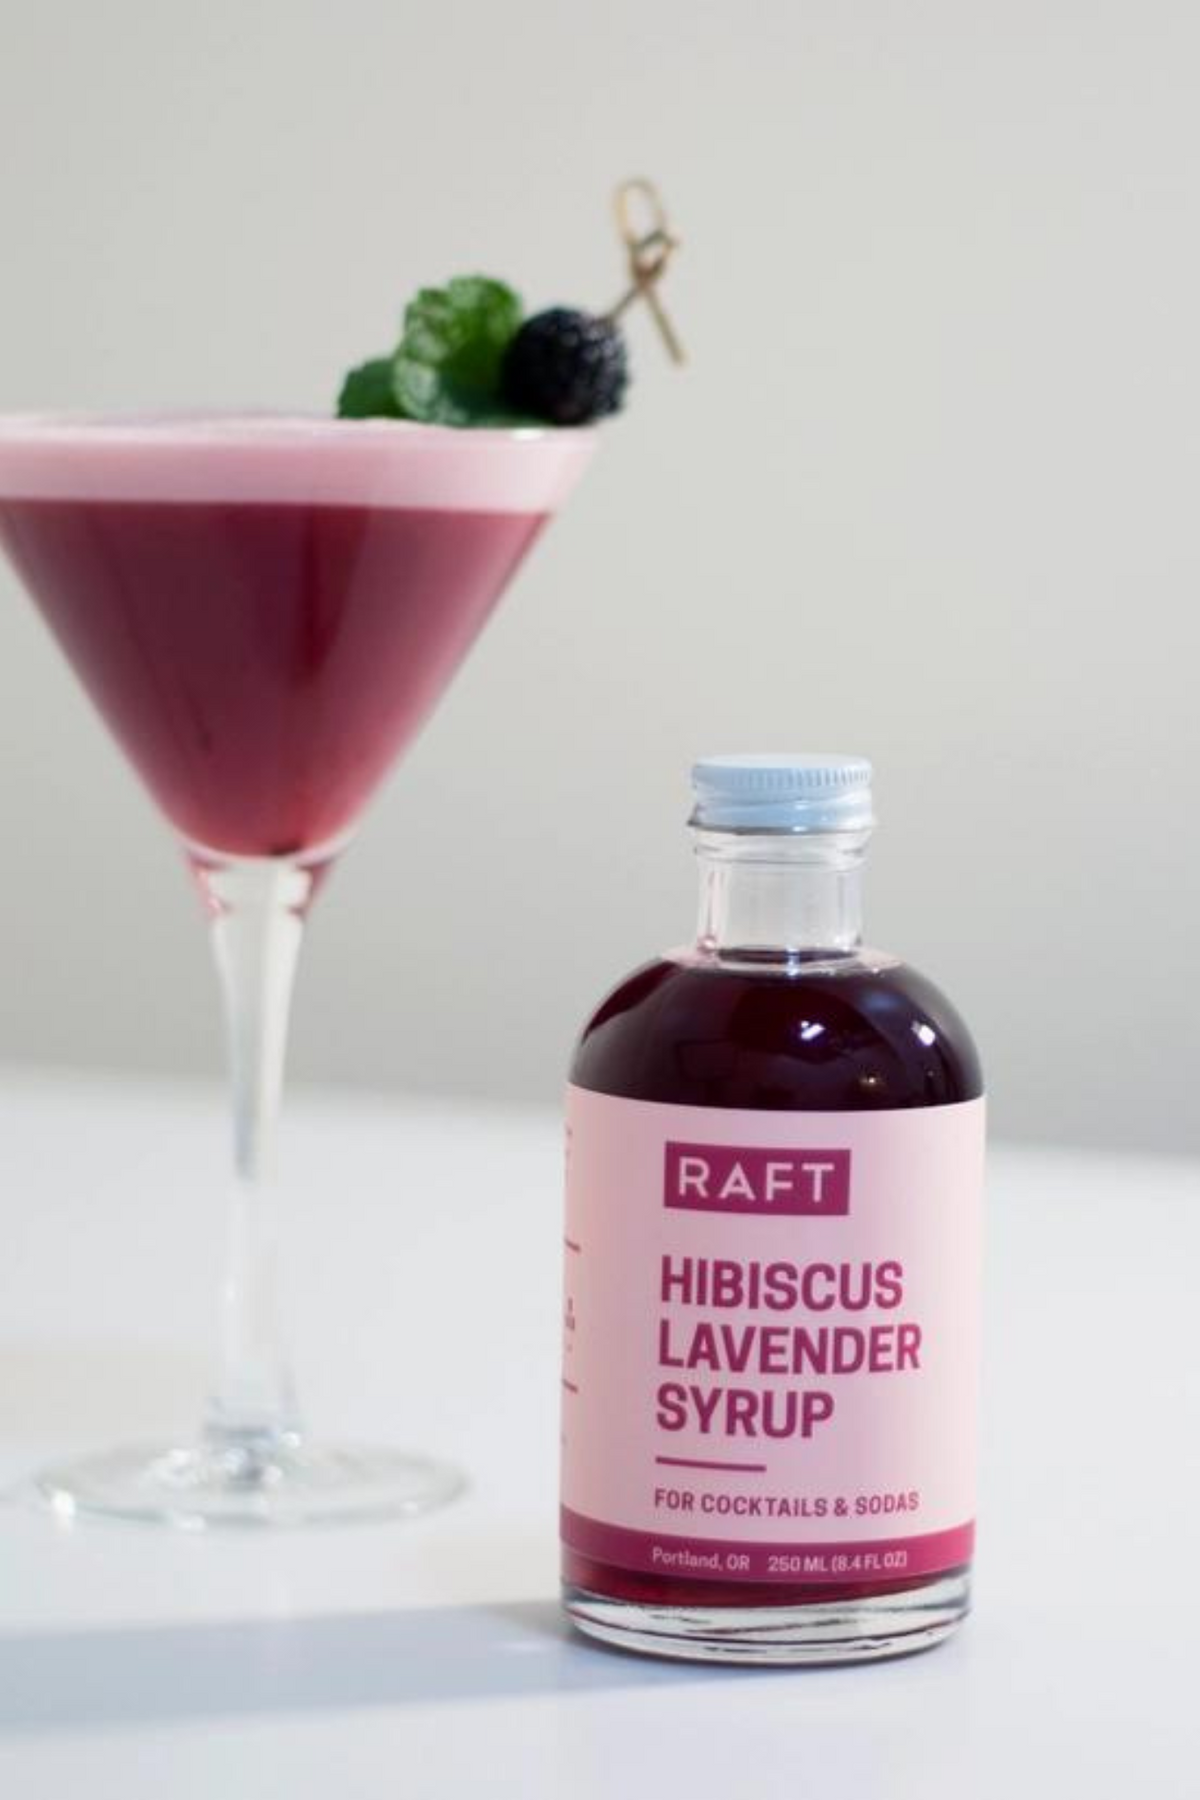 RAFT Hibiscus Lavender Syrup